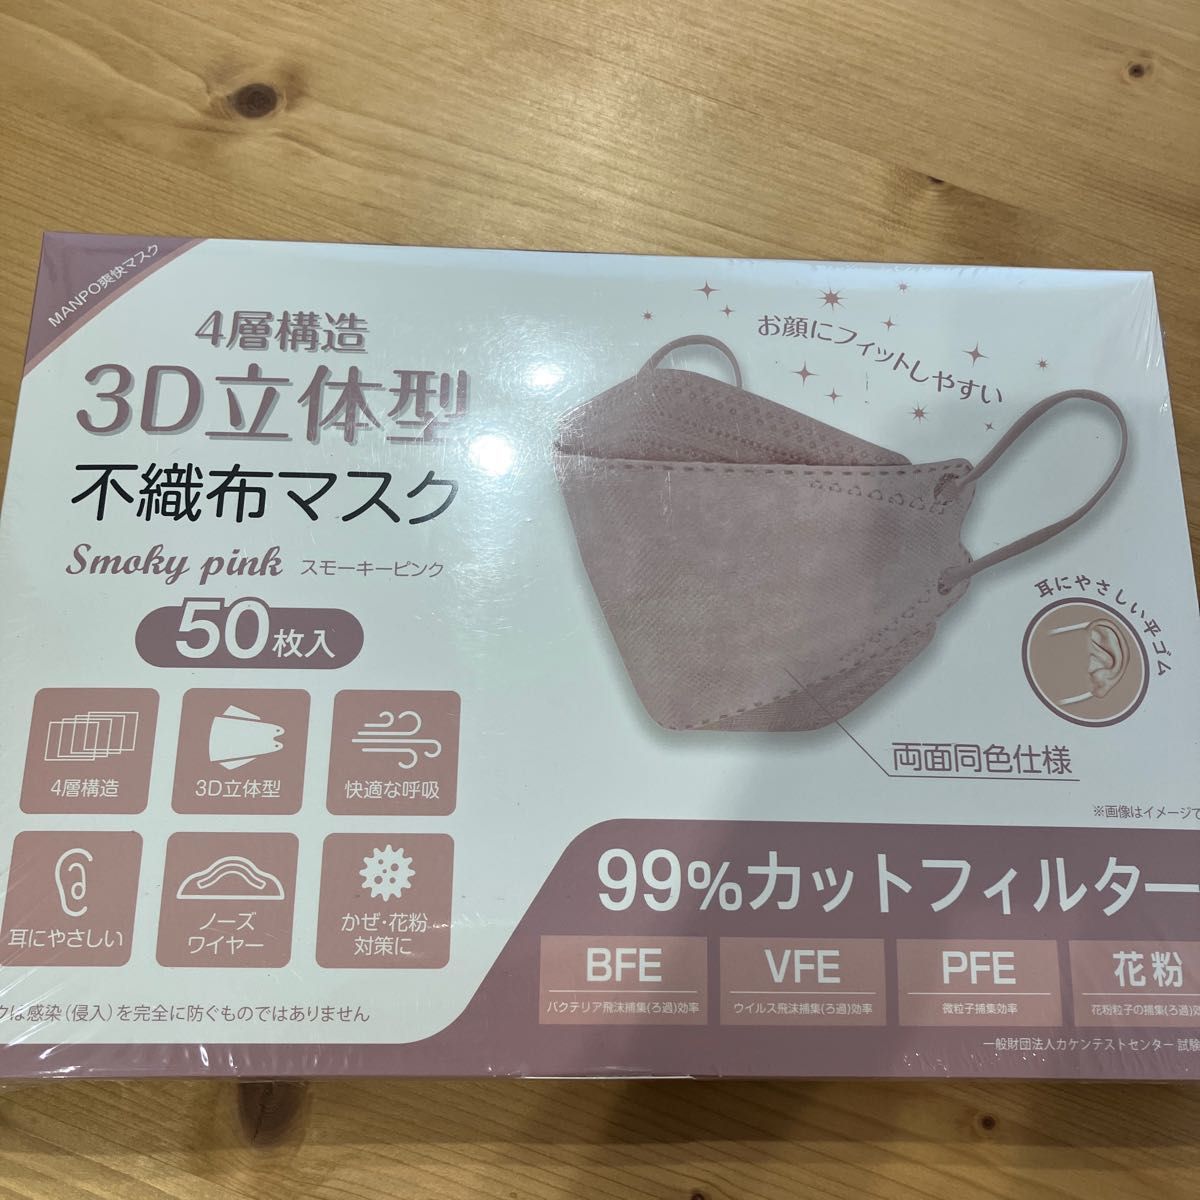 3D 不織布マスク 4層構造 スモーキーピンク 50枚 新品未使用品 - 避難用具